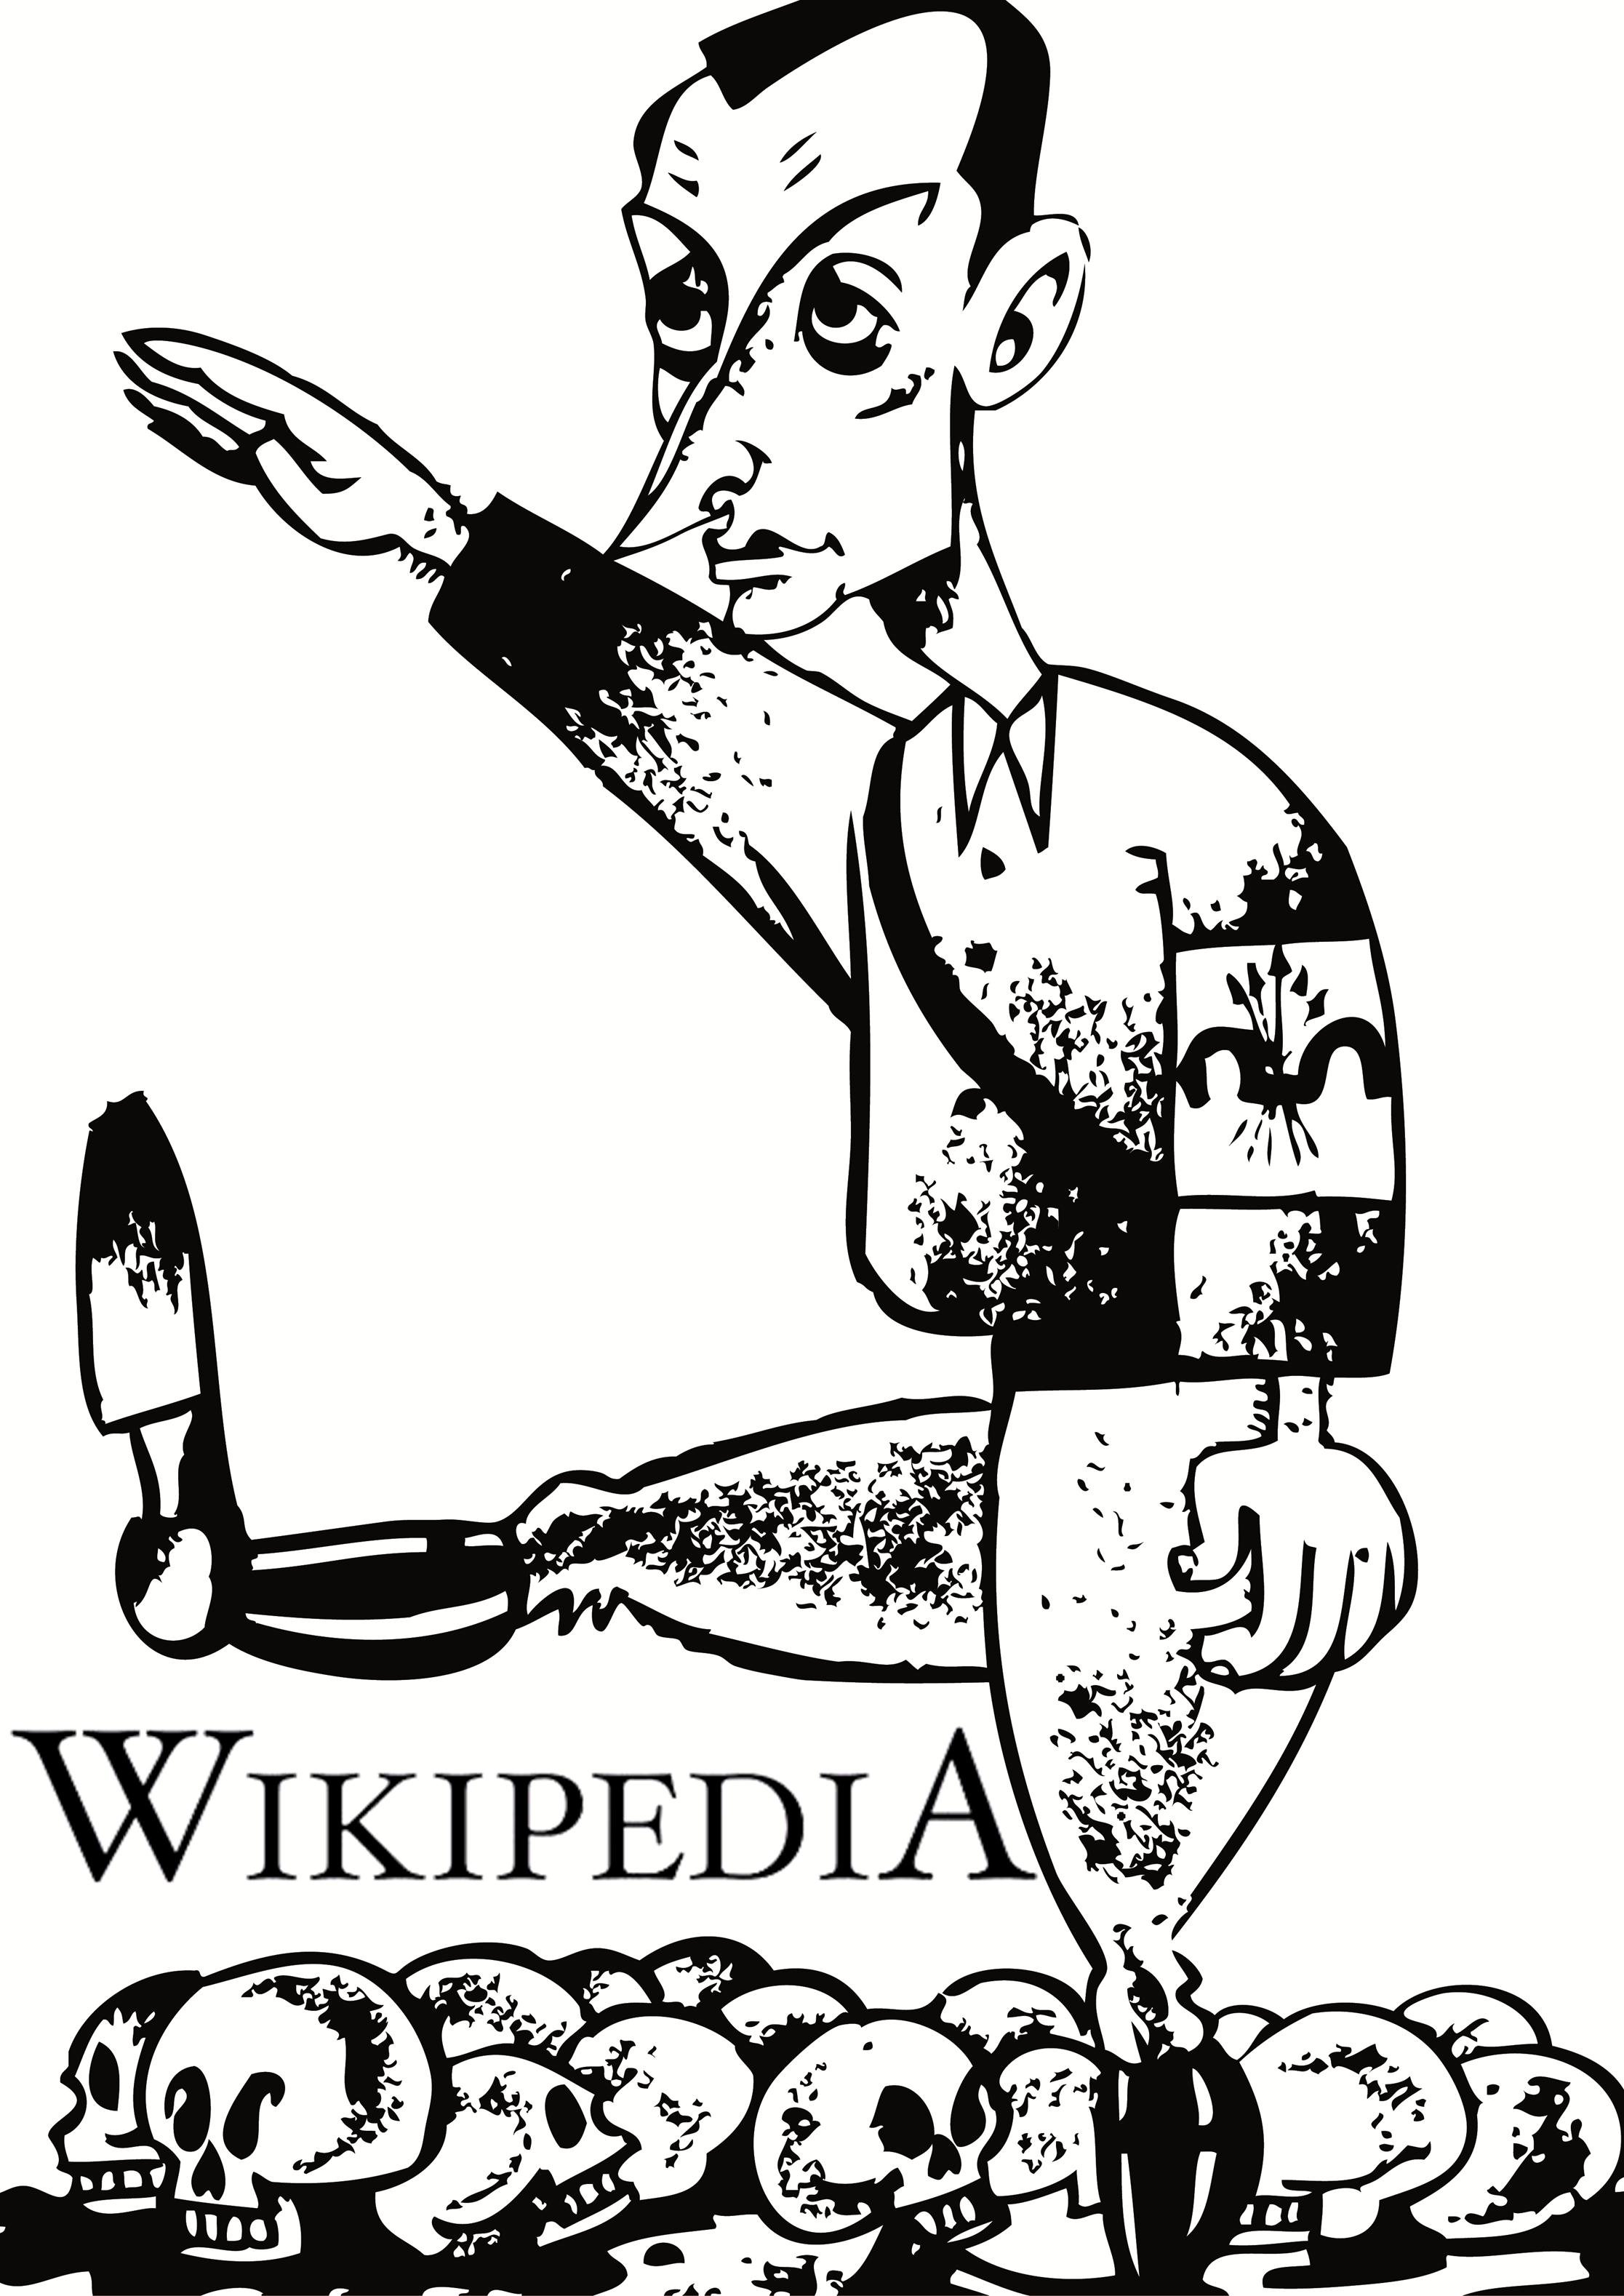 Fascisti su Wikipedia: Jose Antonio